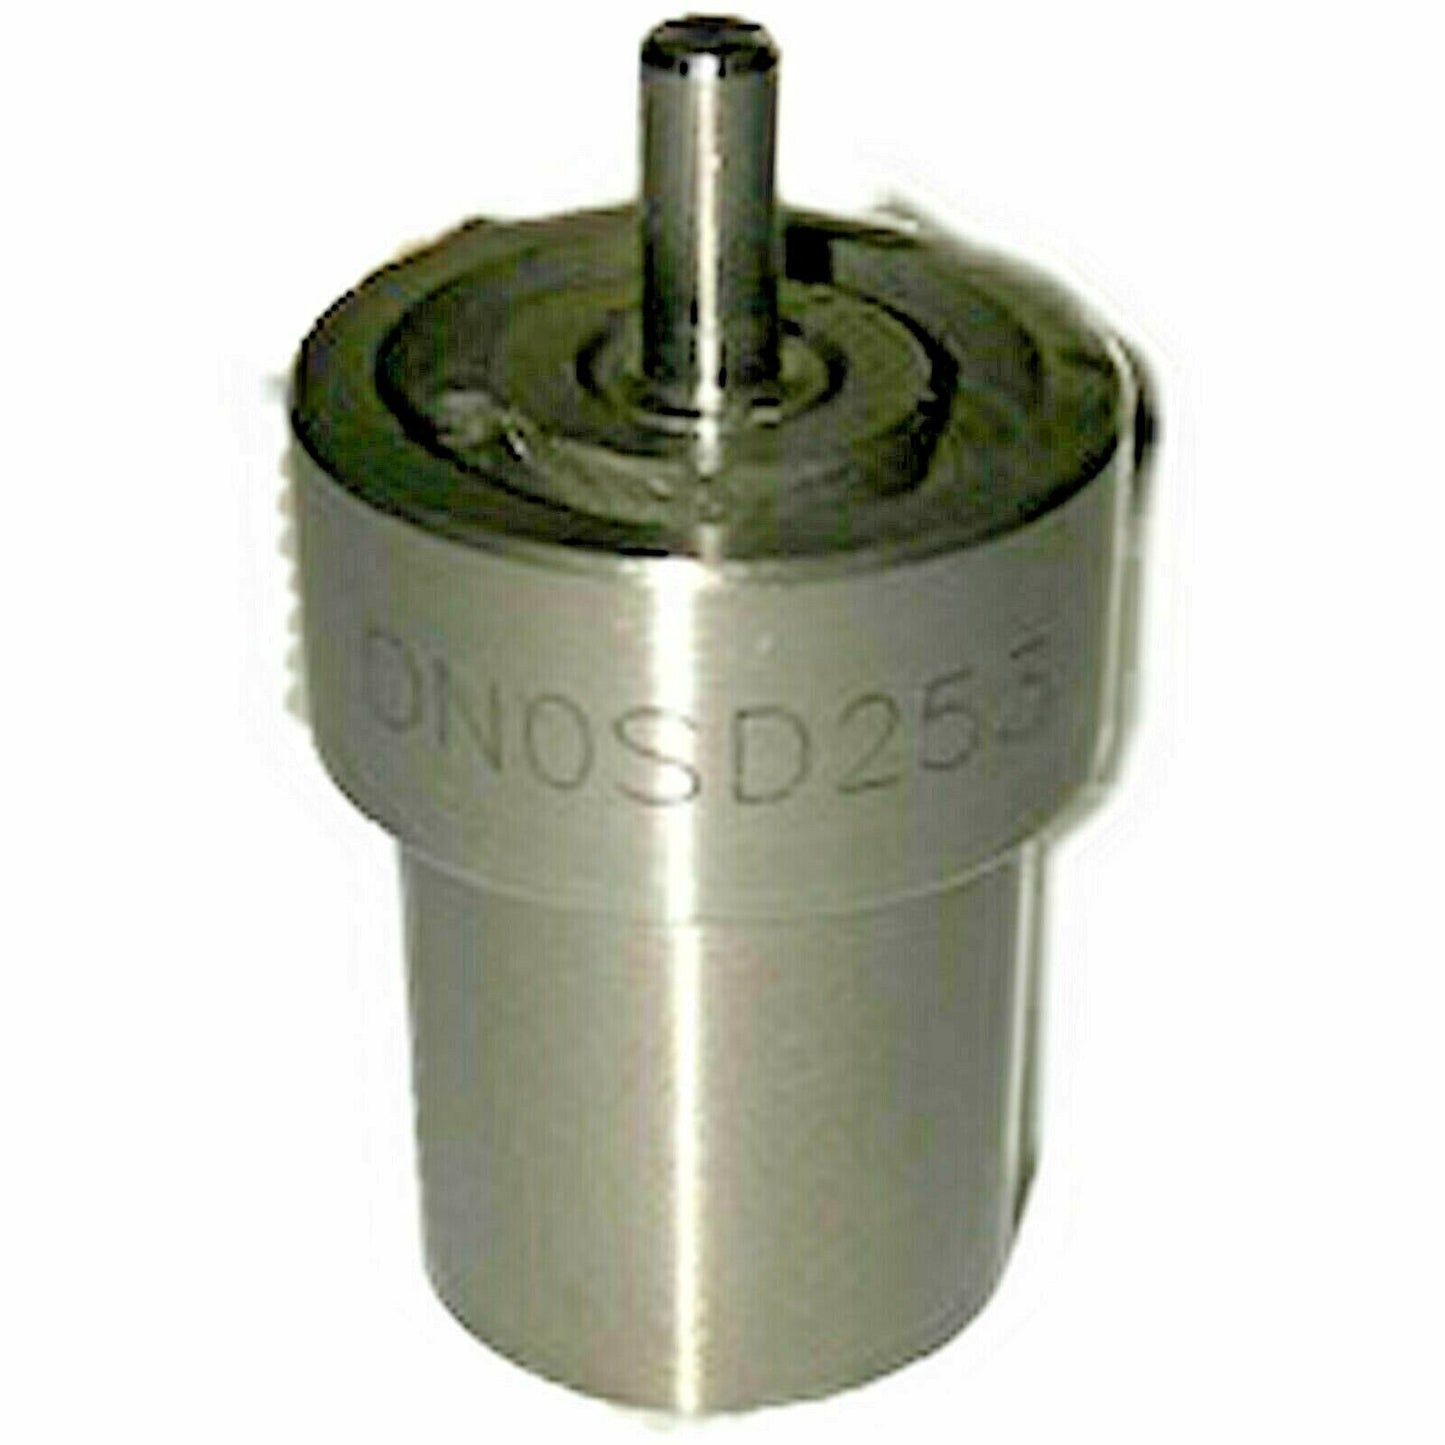 Bosch Diesel Injector Nozzle DN0SD253 / 0-434-250-111 / DELPHI 5643810